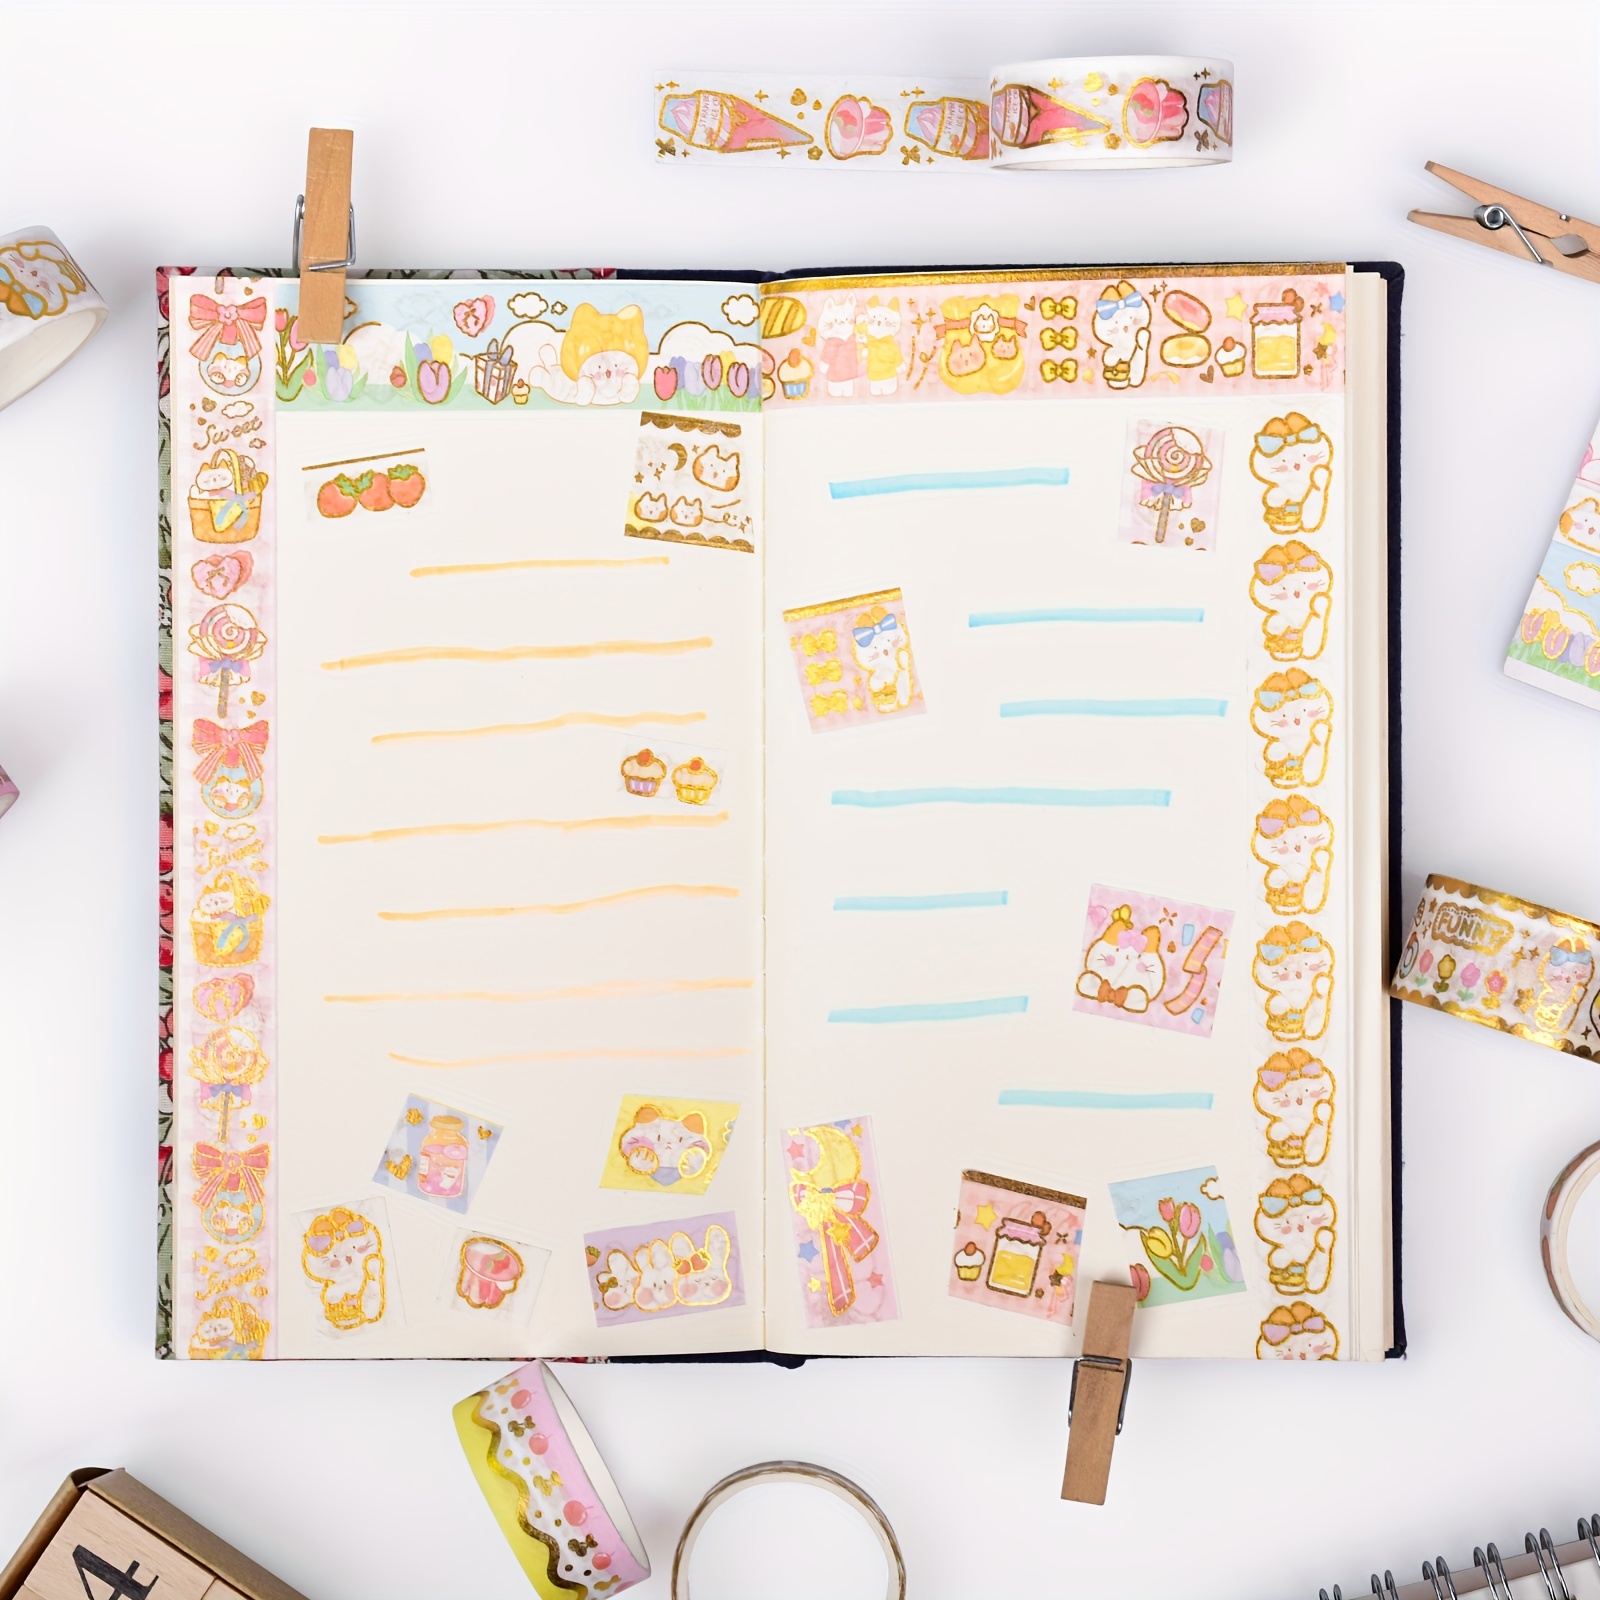 WAPETASHI Cute Washi Tape Set - 24 Rolls Kawaii Animals Gold Foil  Decorative Masking Tape for Journaling, Scrapbooking, Kids DIY Crafts, Gift  Wrapping, Aesthetic Supplies, Planners, Bullet Journal